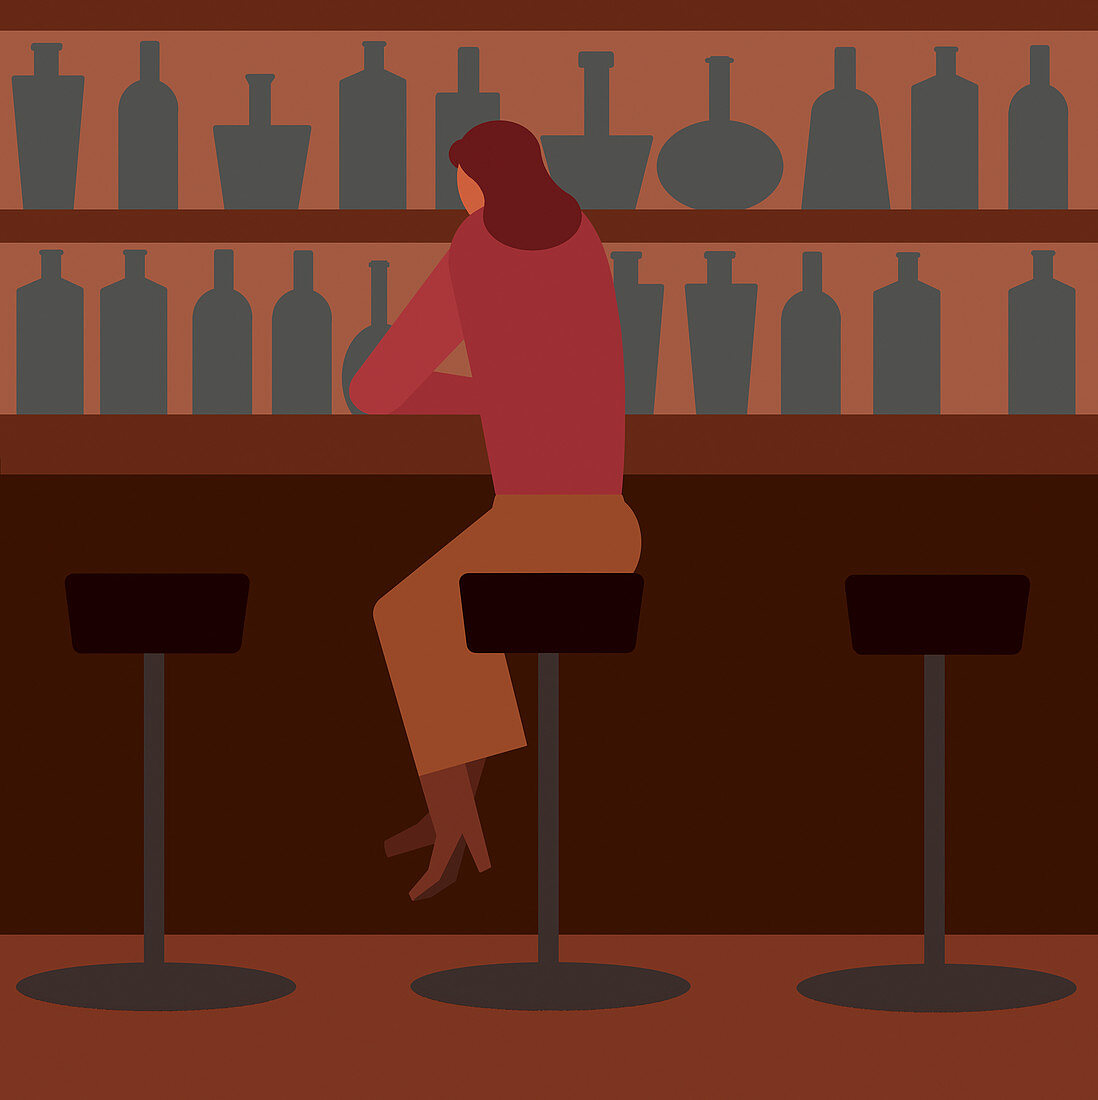 Woman drinking alone in bar, illustration